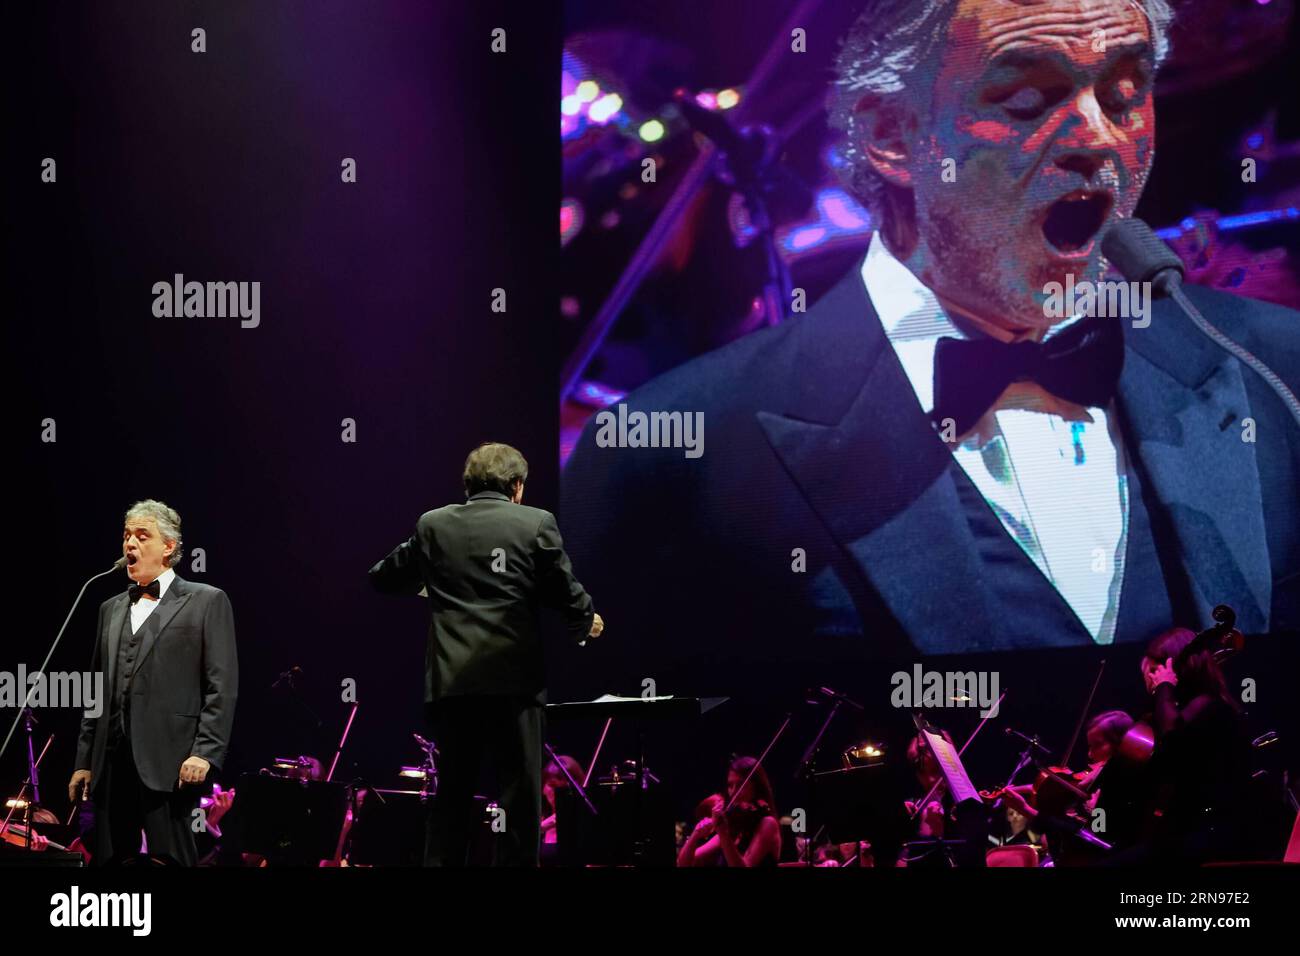 (151122) -- BUDAPEST, Nov. 22, 2015 -- Italian tenor Andrea Bocelli sings at a concert in Papp Laszlo Sports Arena in Budapest, Hungary on Nov. 22, 2015. ) HUNGARY-BUDAPEST-CONCERT-ANDREA BOCELLI AttilaxVolgyi PUBLICATIONxNOTxINxCHN   151122 Budapest Nov 22 2015 Italian Tenor Andrea Bocelli Sings AT a Concert in Papp Laszlo Sports Arena in Budapest Hungary ON Nov 22 2015 Hungary Budapest Concert Andrea Bocelli ATTILAxVOLGYI PUBLICATIONxNOTxINxCHN Stock Photo